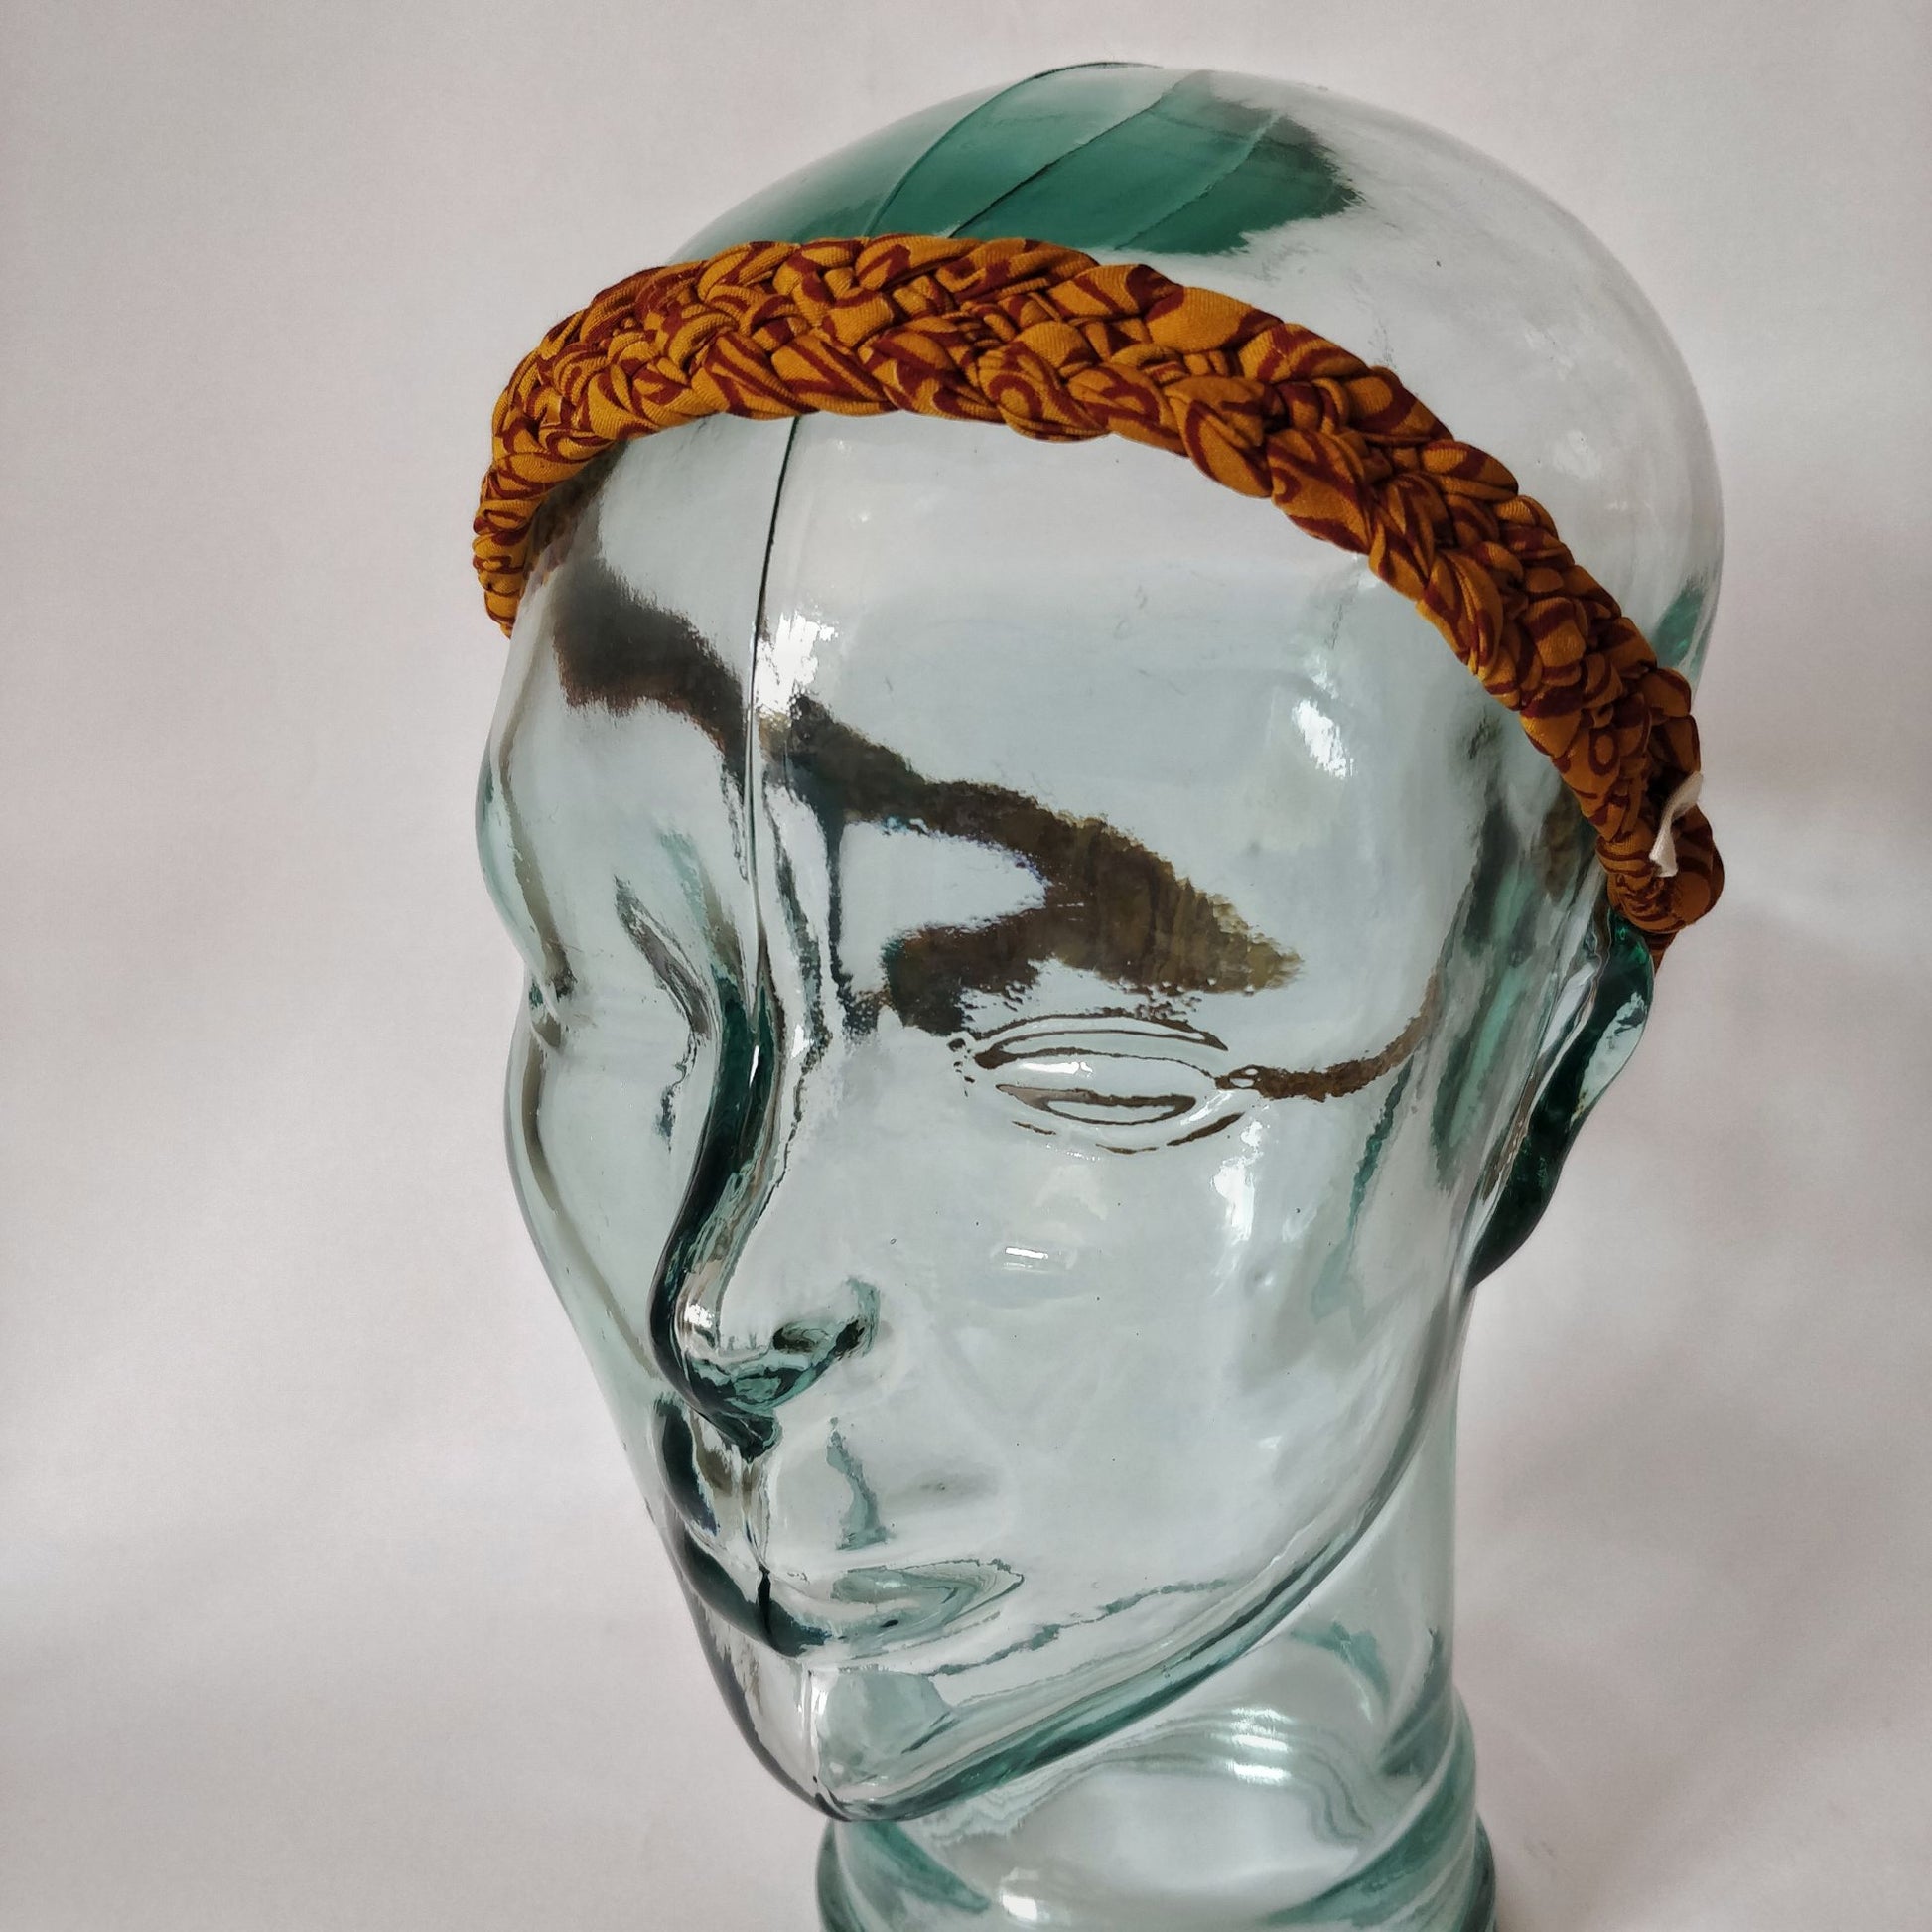 Braided Sari Headband Empowering Women in India - ethical hair accessories